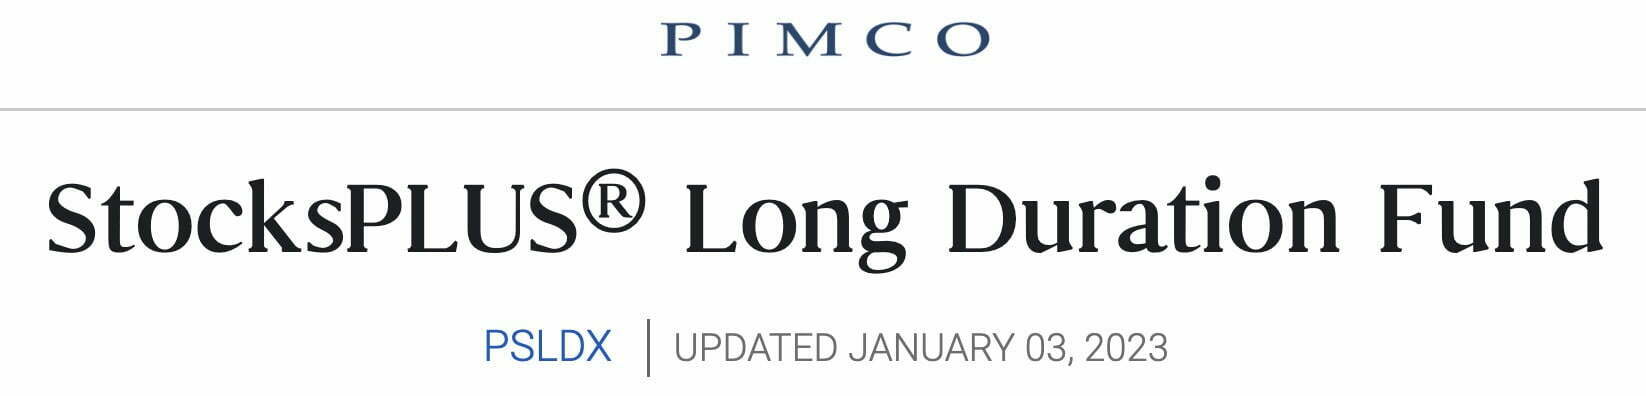 PIMCO StocksPLUS Long Duration Fund Logo 